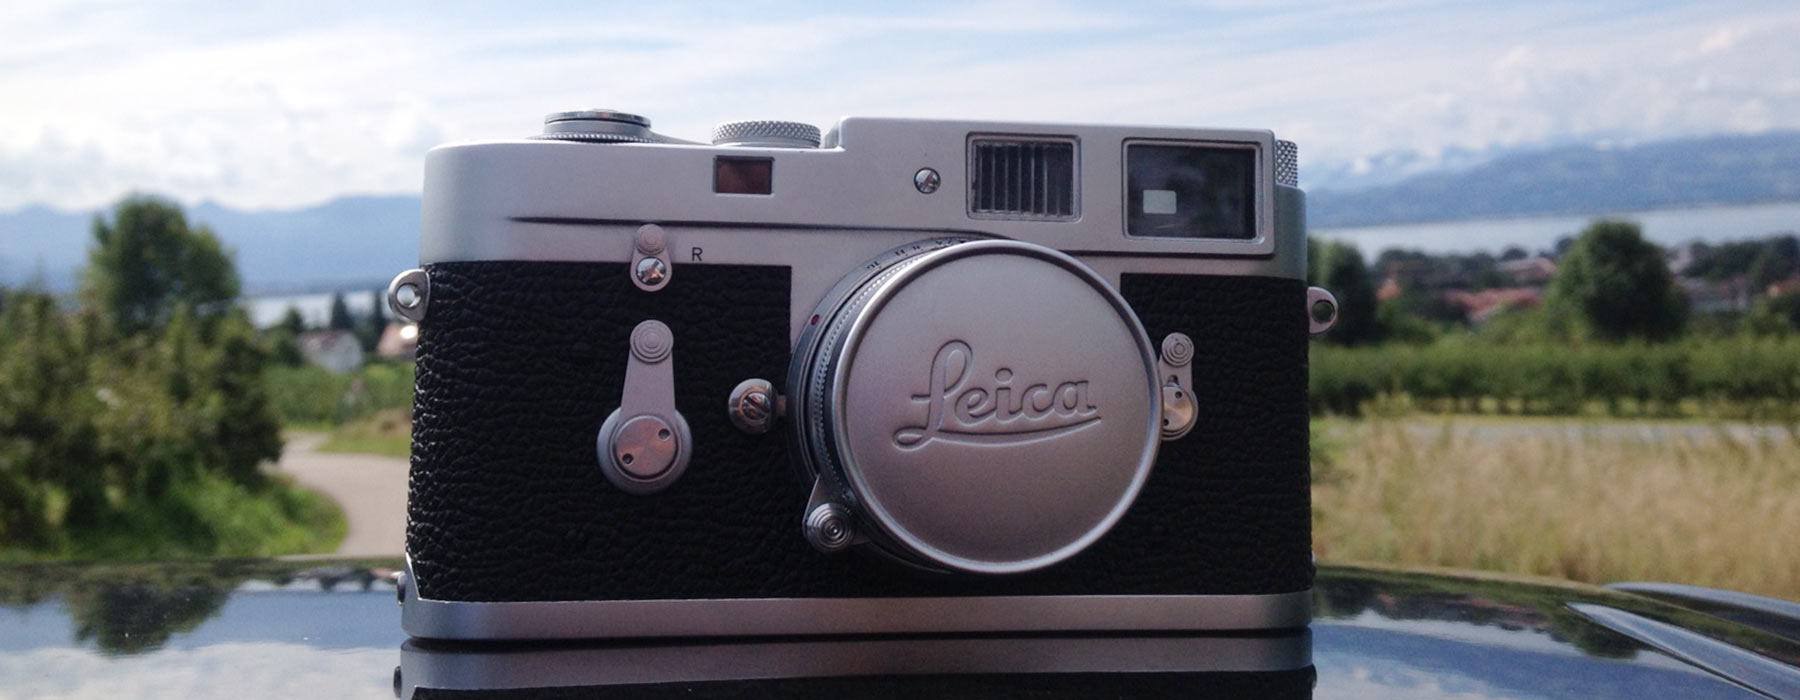 177 Jahre Fotografie Leica Fotografie